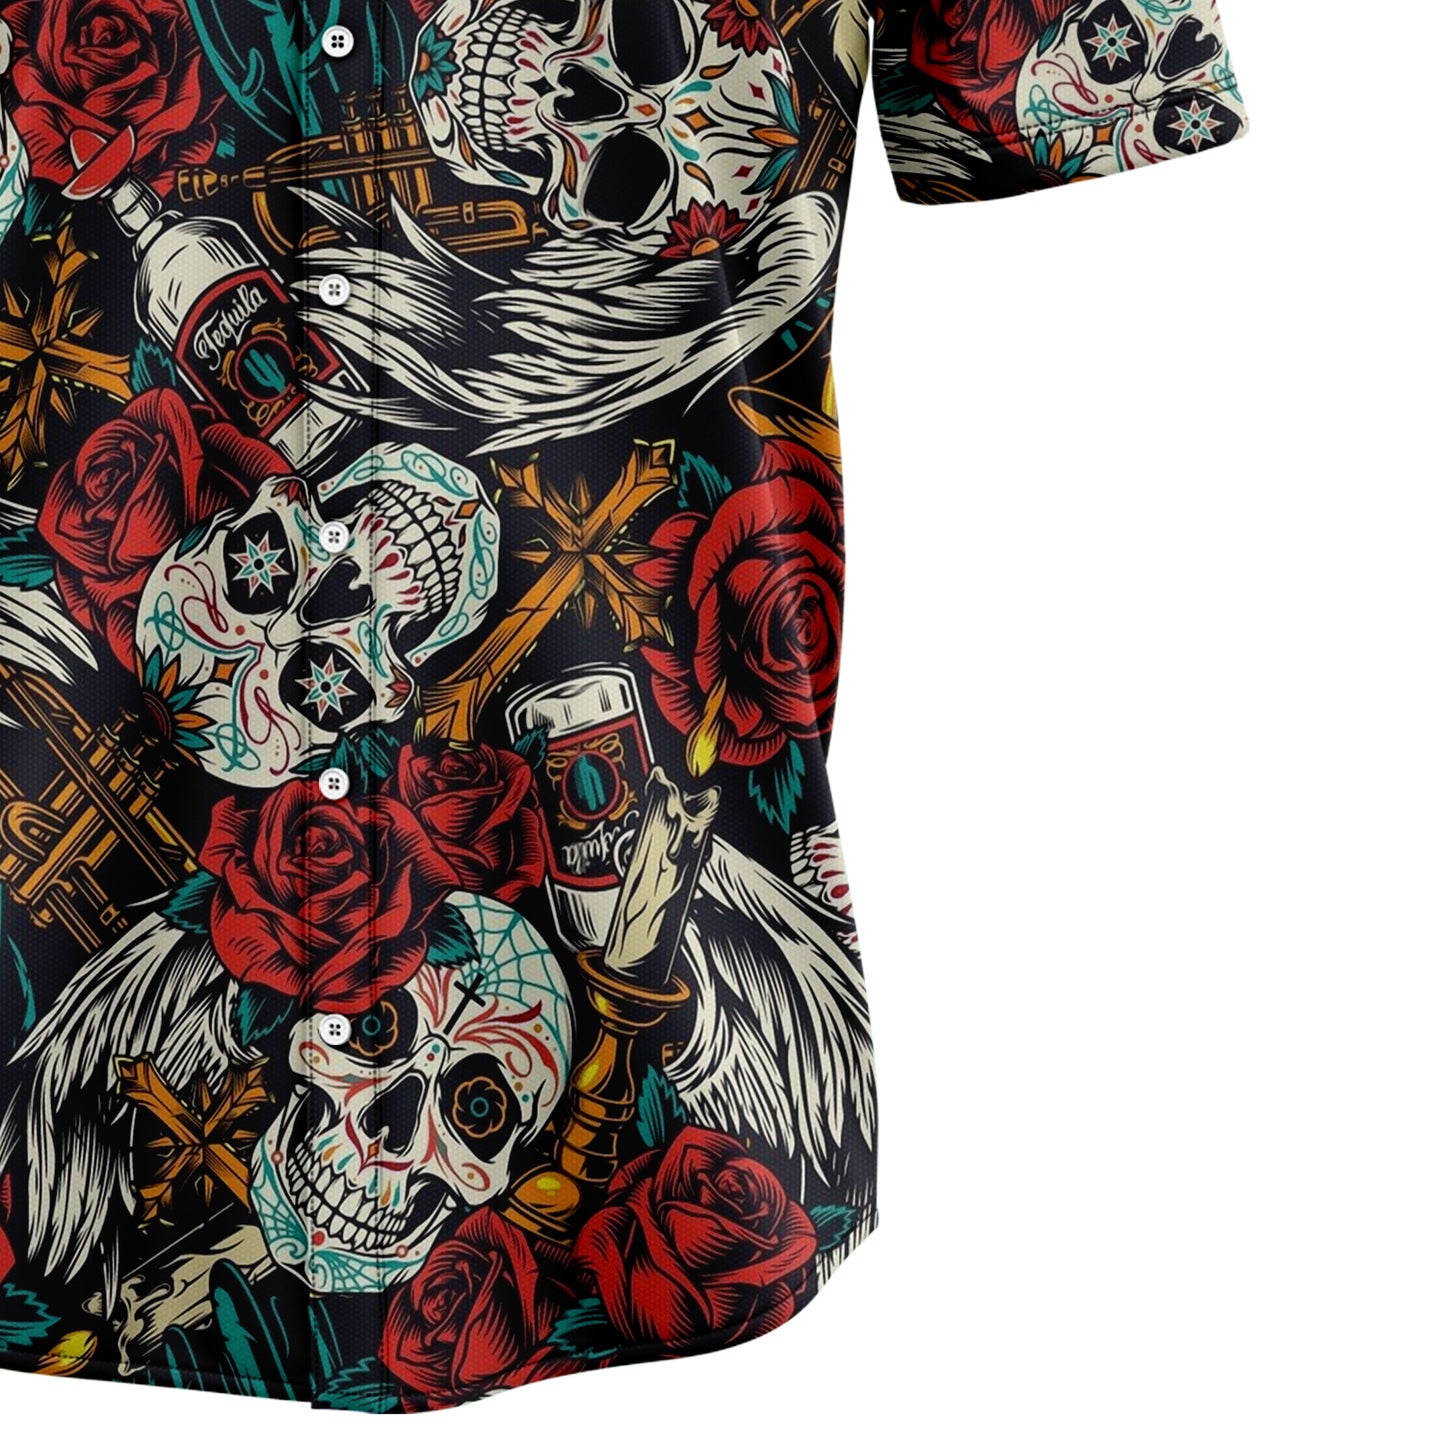 Rose Sugar Skull G5710 Hawaiian Shirt